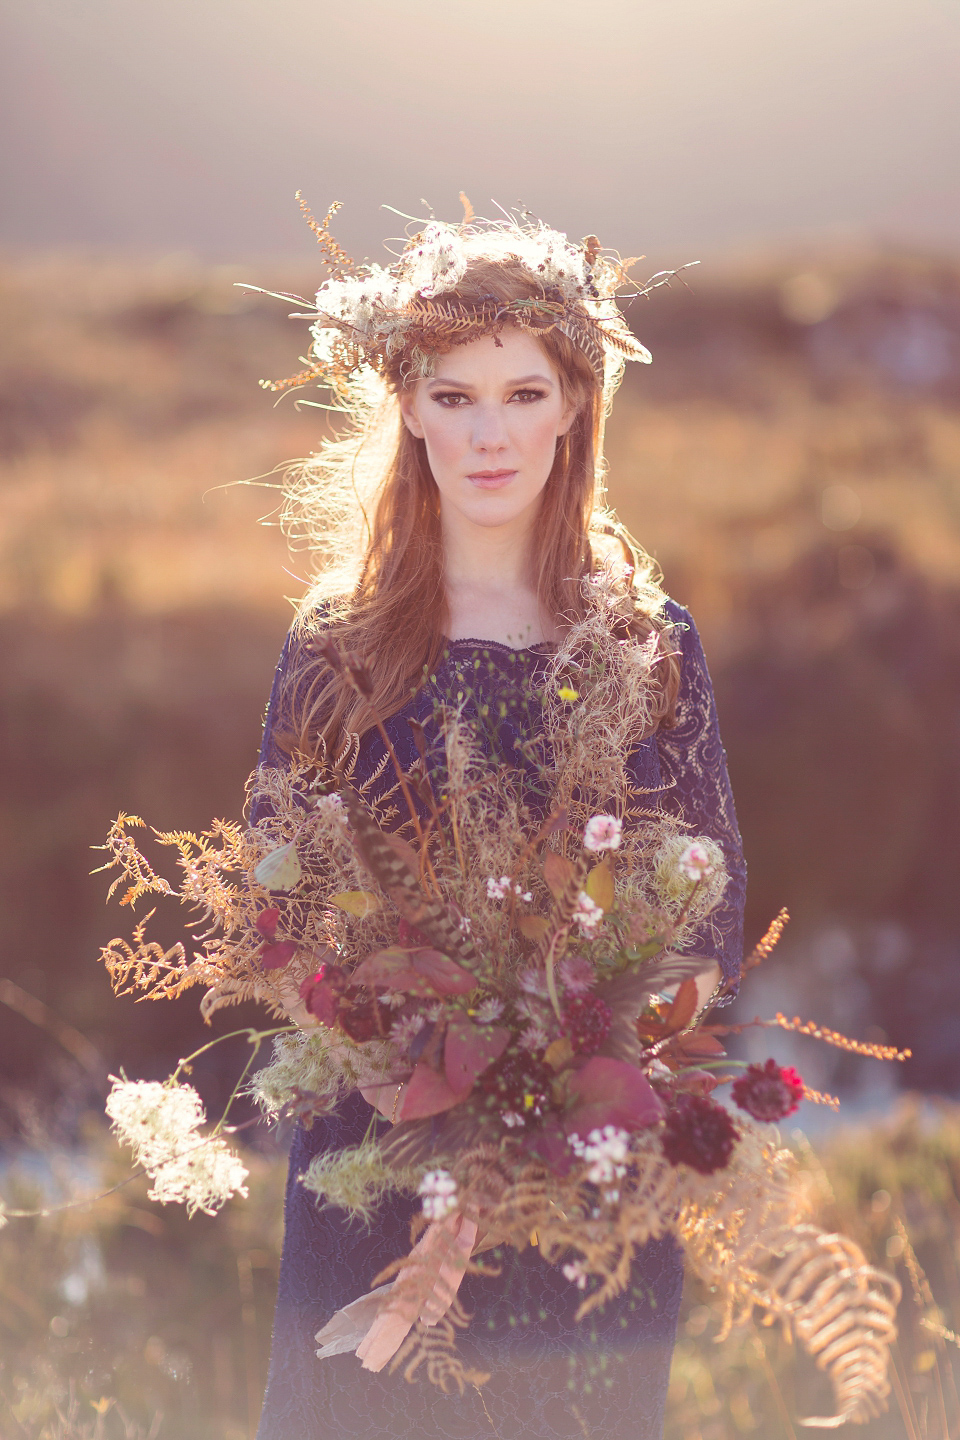 Wild Scotland - a bridal editorial shoot by Craig and Eva Sanders.